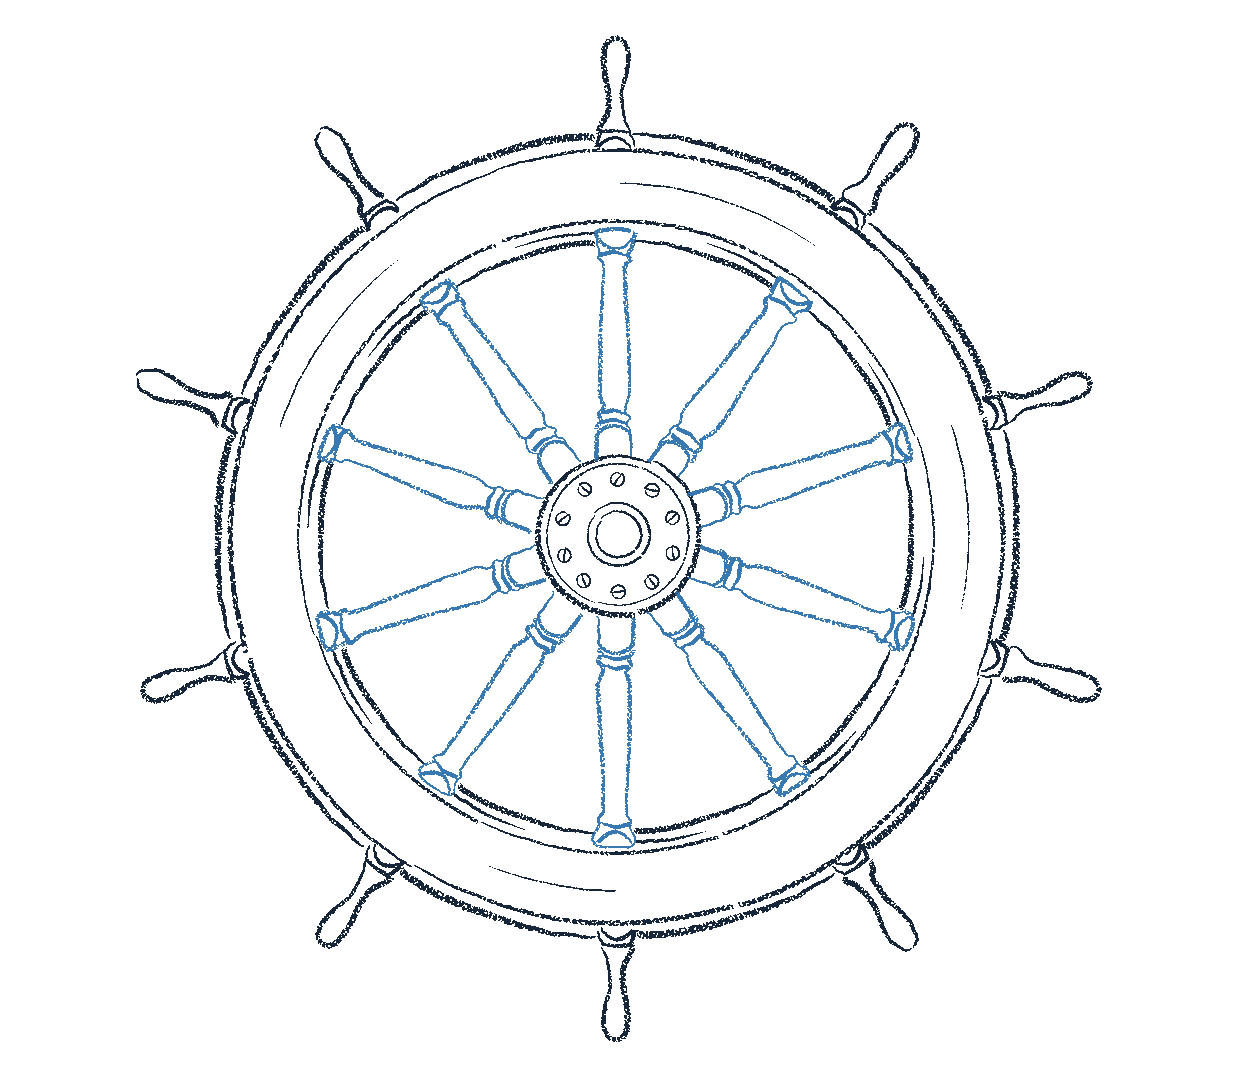 Illustration of a ship's wheel